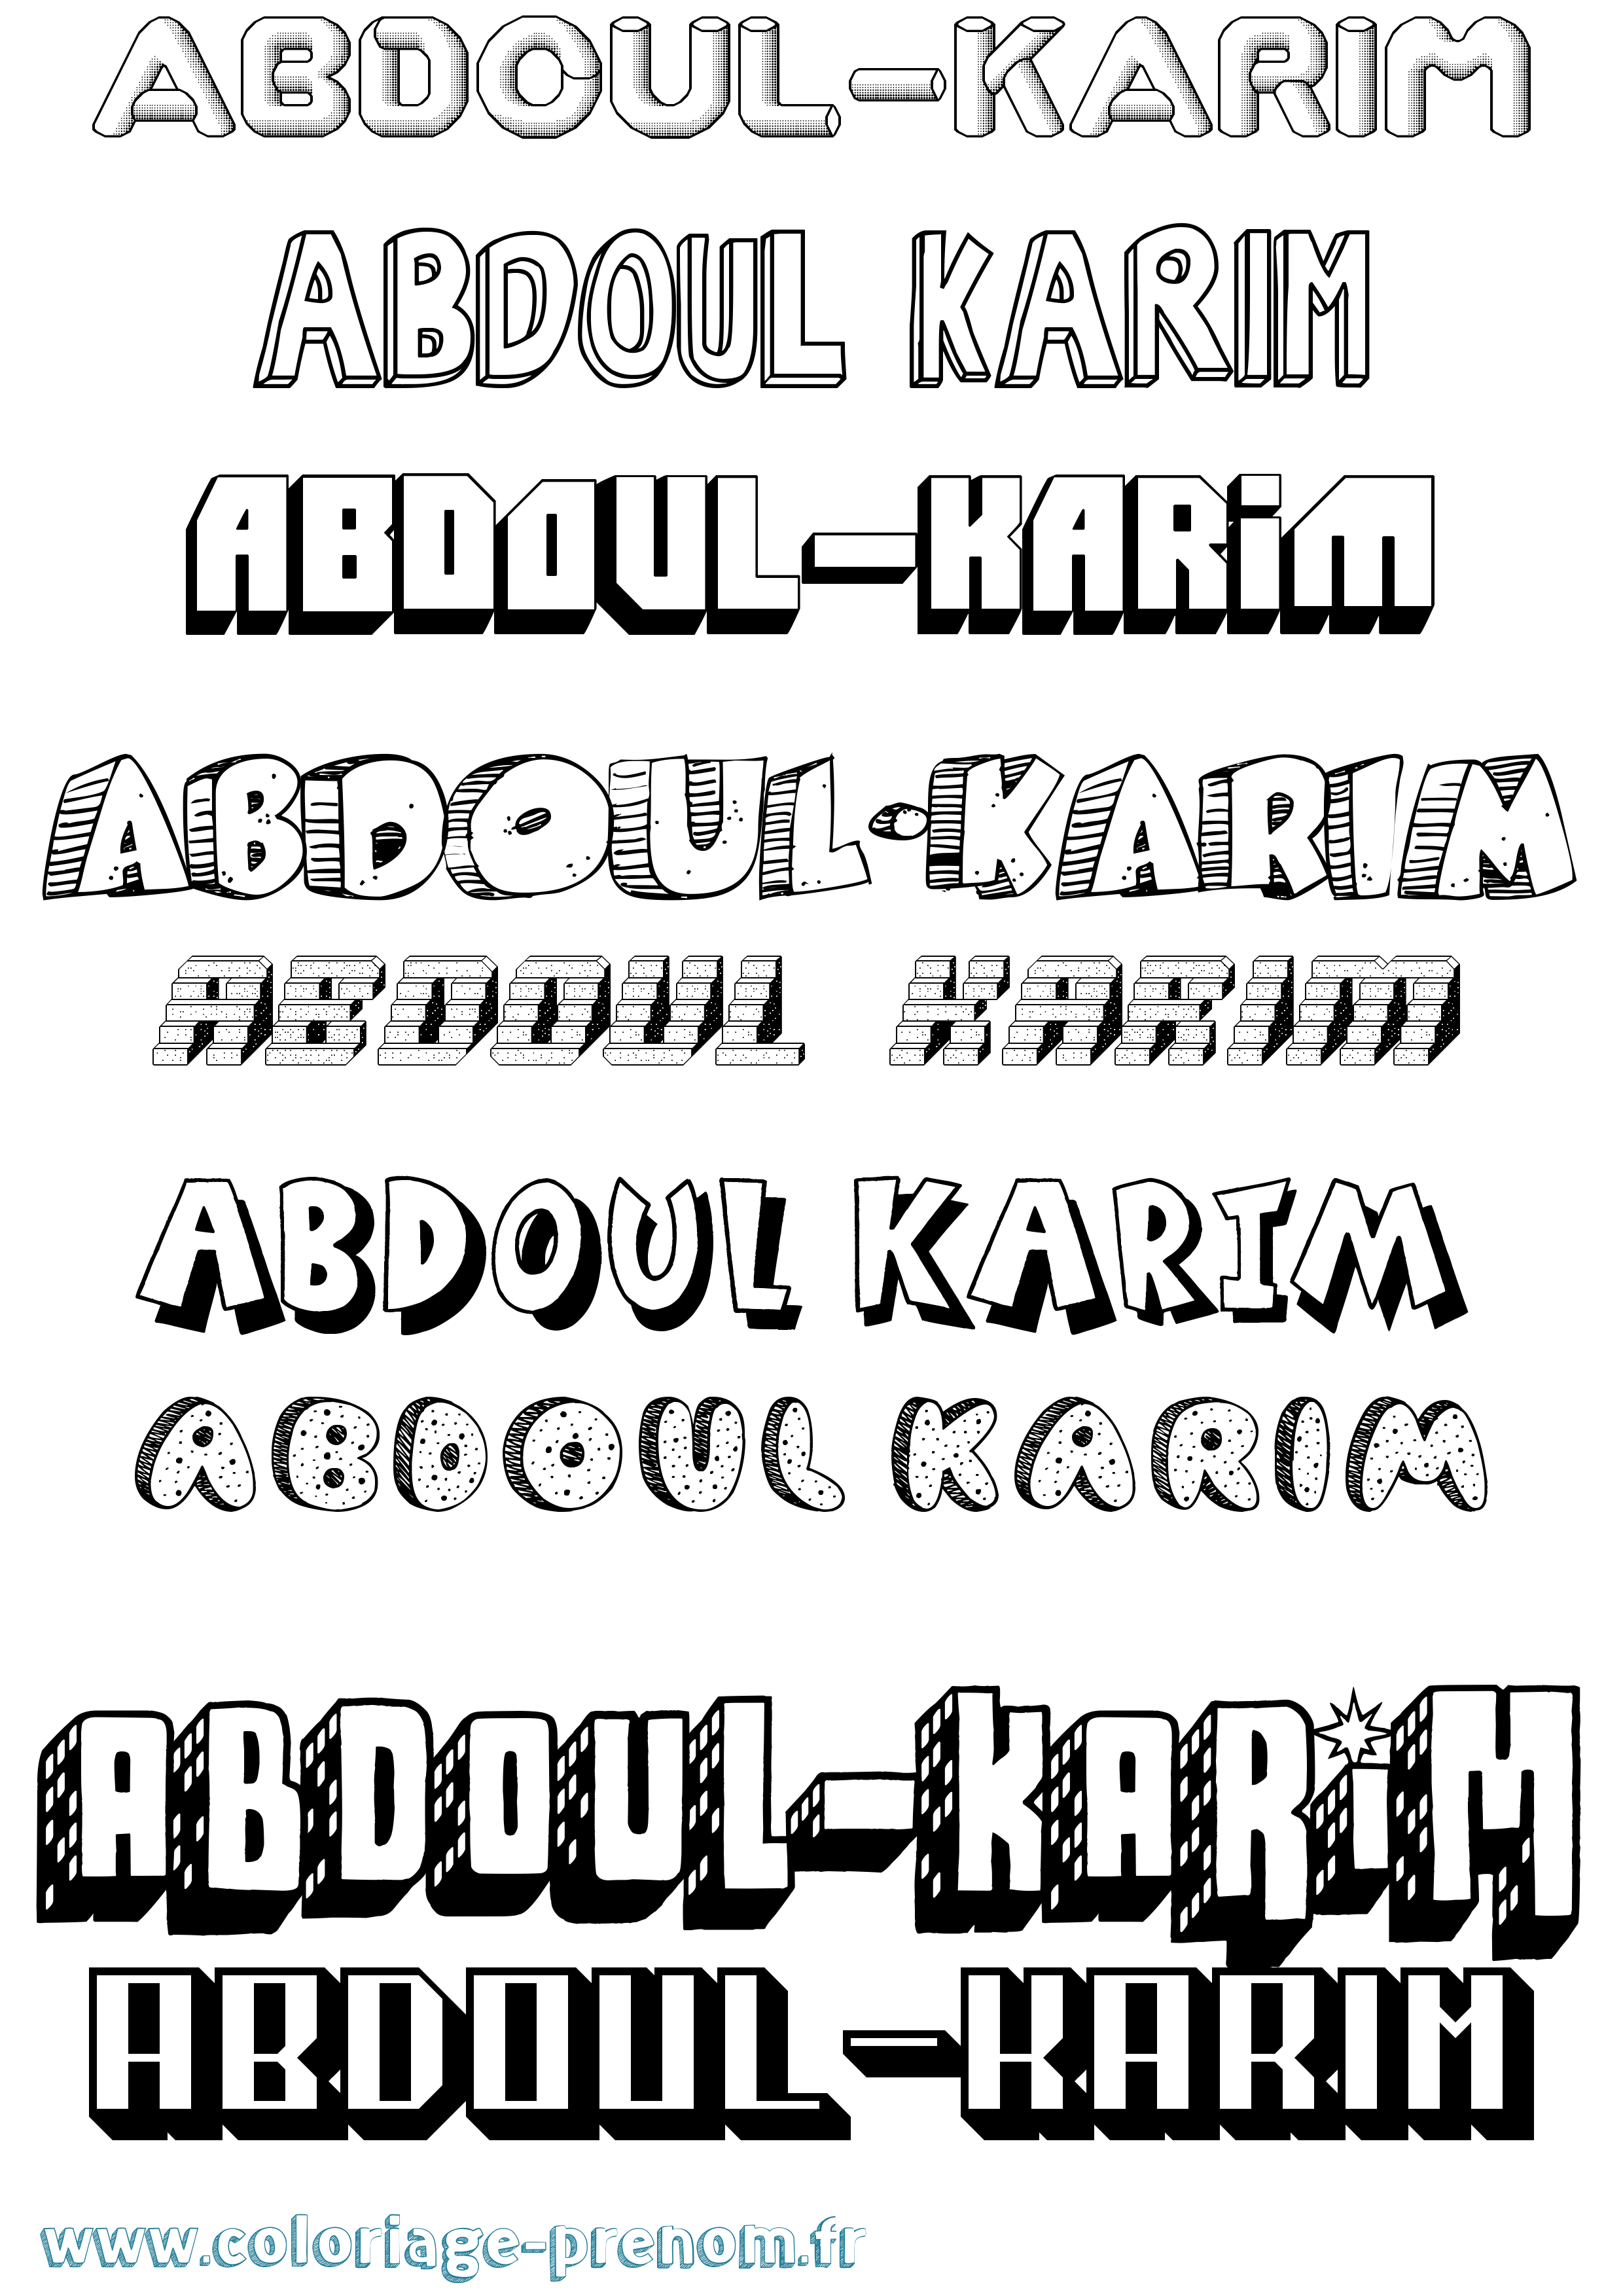 Coloriage prénom Abdoul-Karim Effet 3D